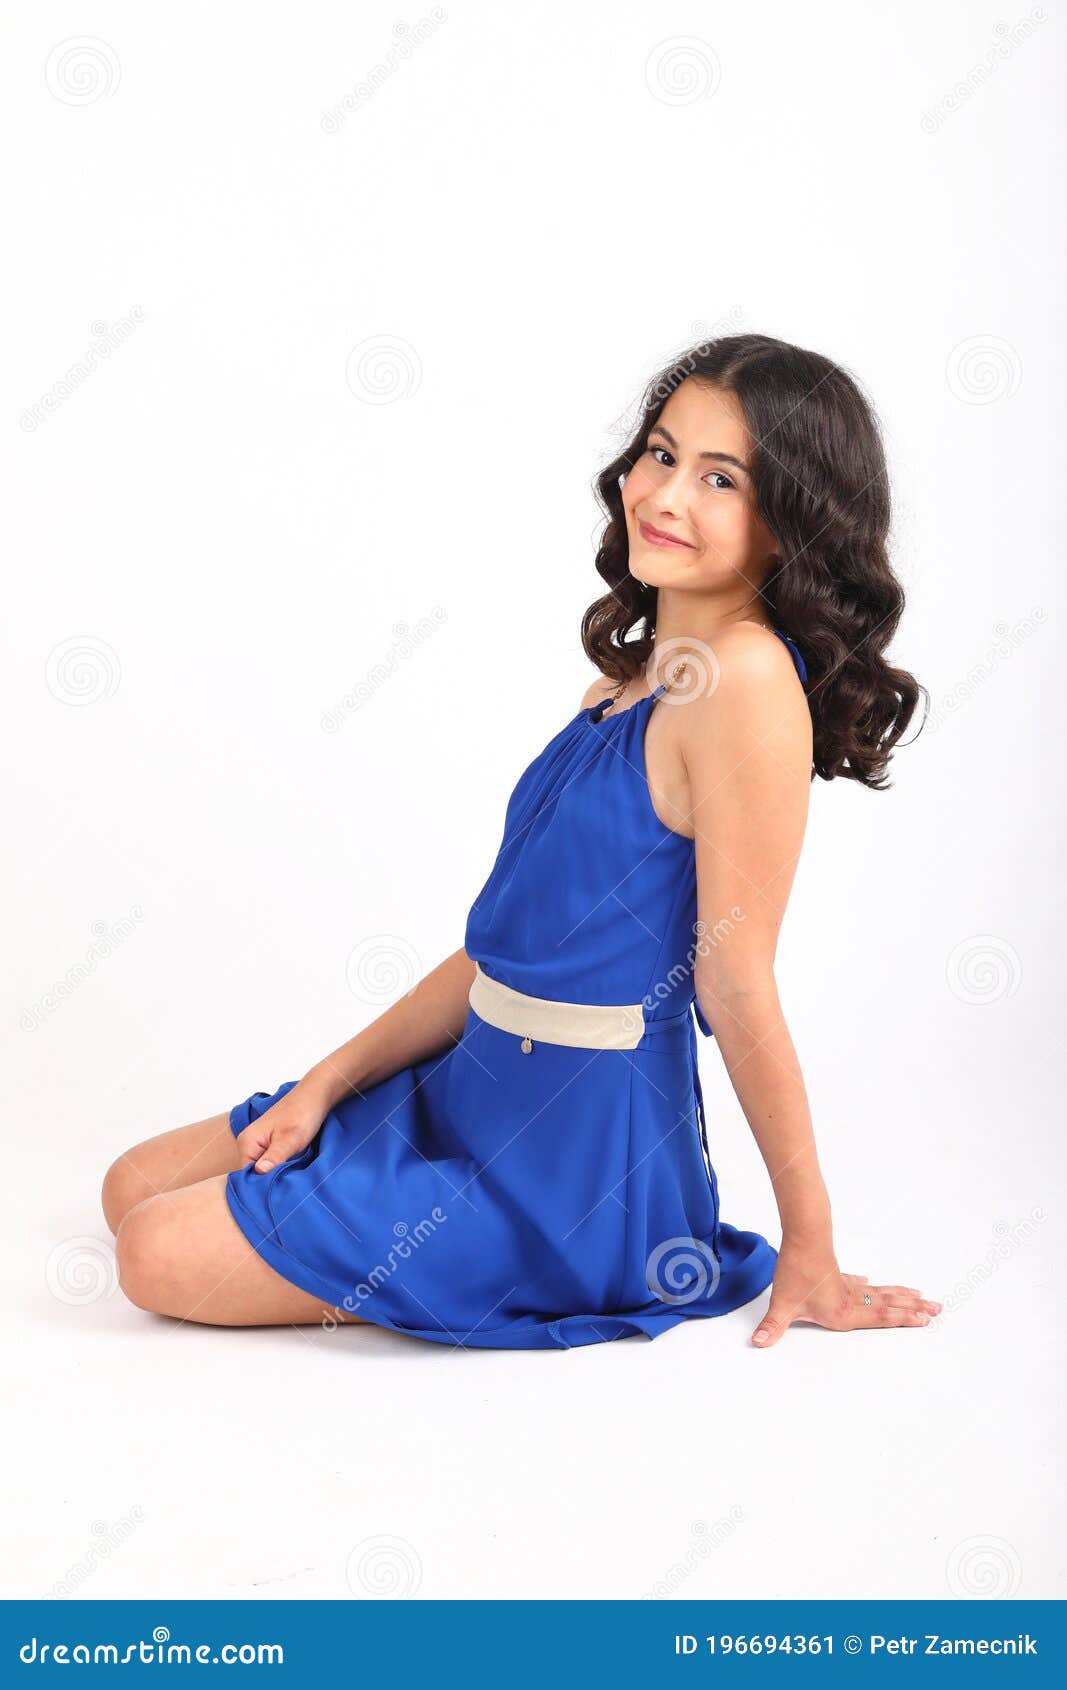 Smiling Teenage Girl Posing in Blue Dress Stock Image - Image of child ...